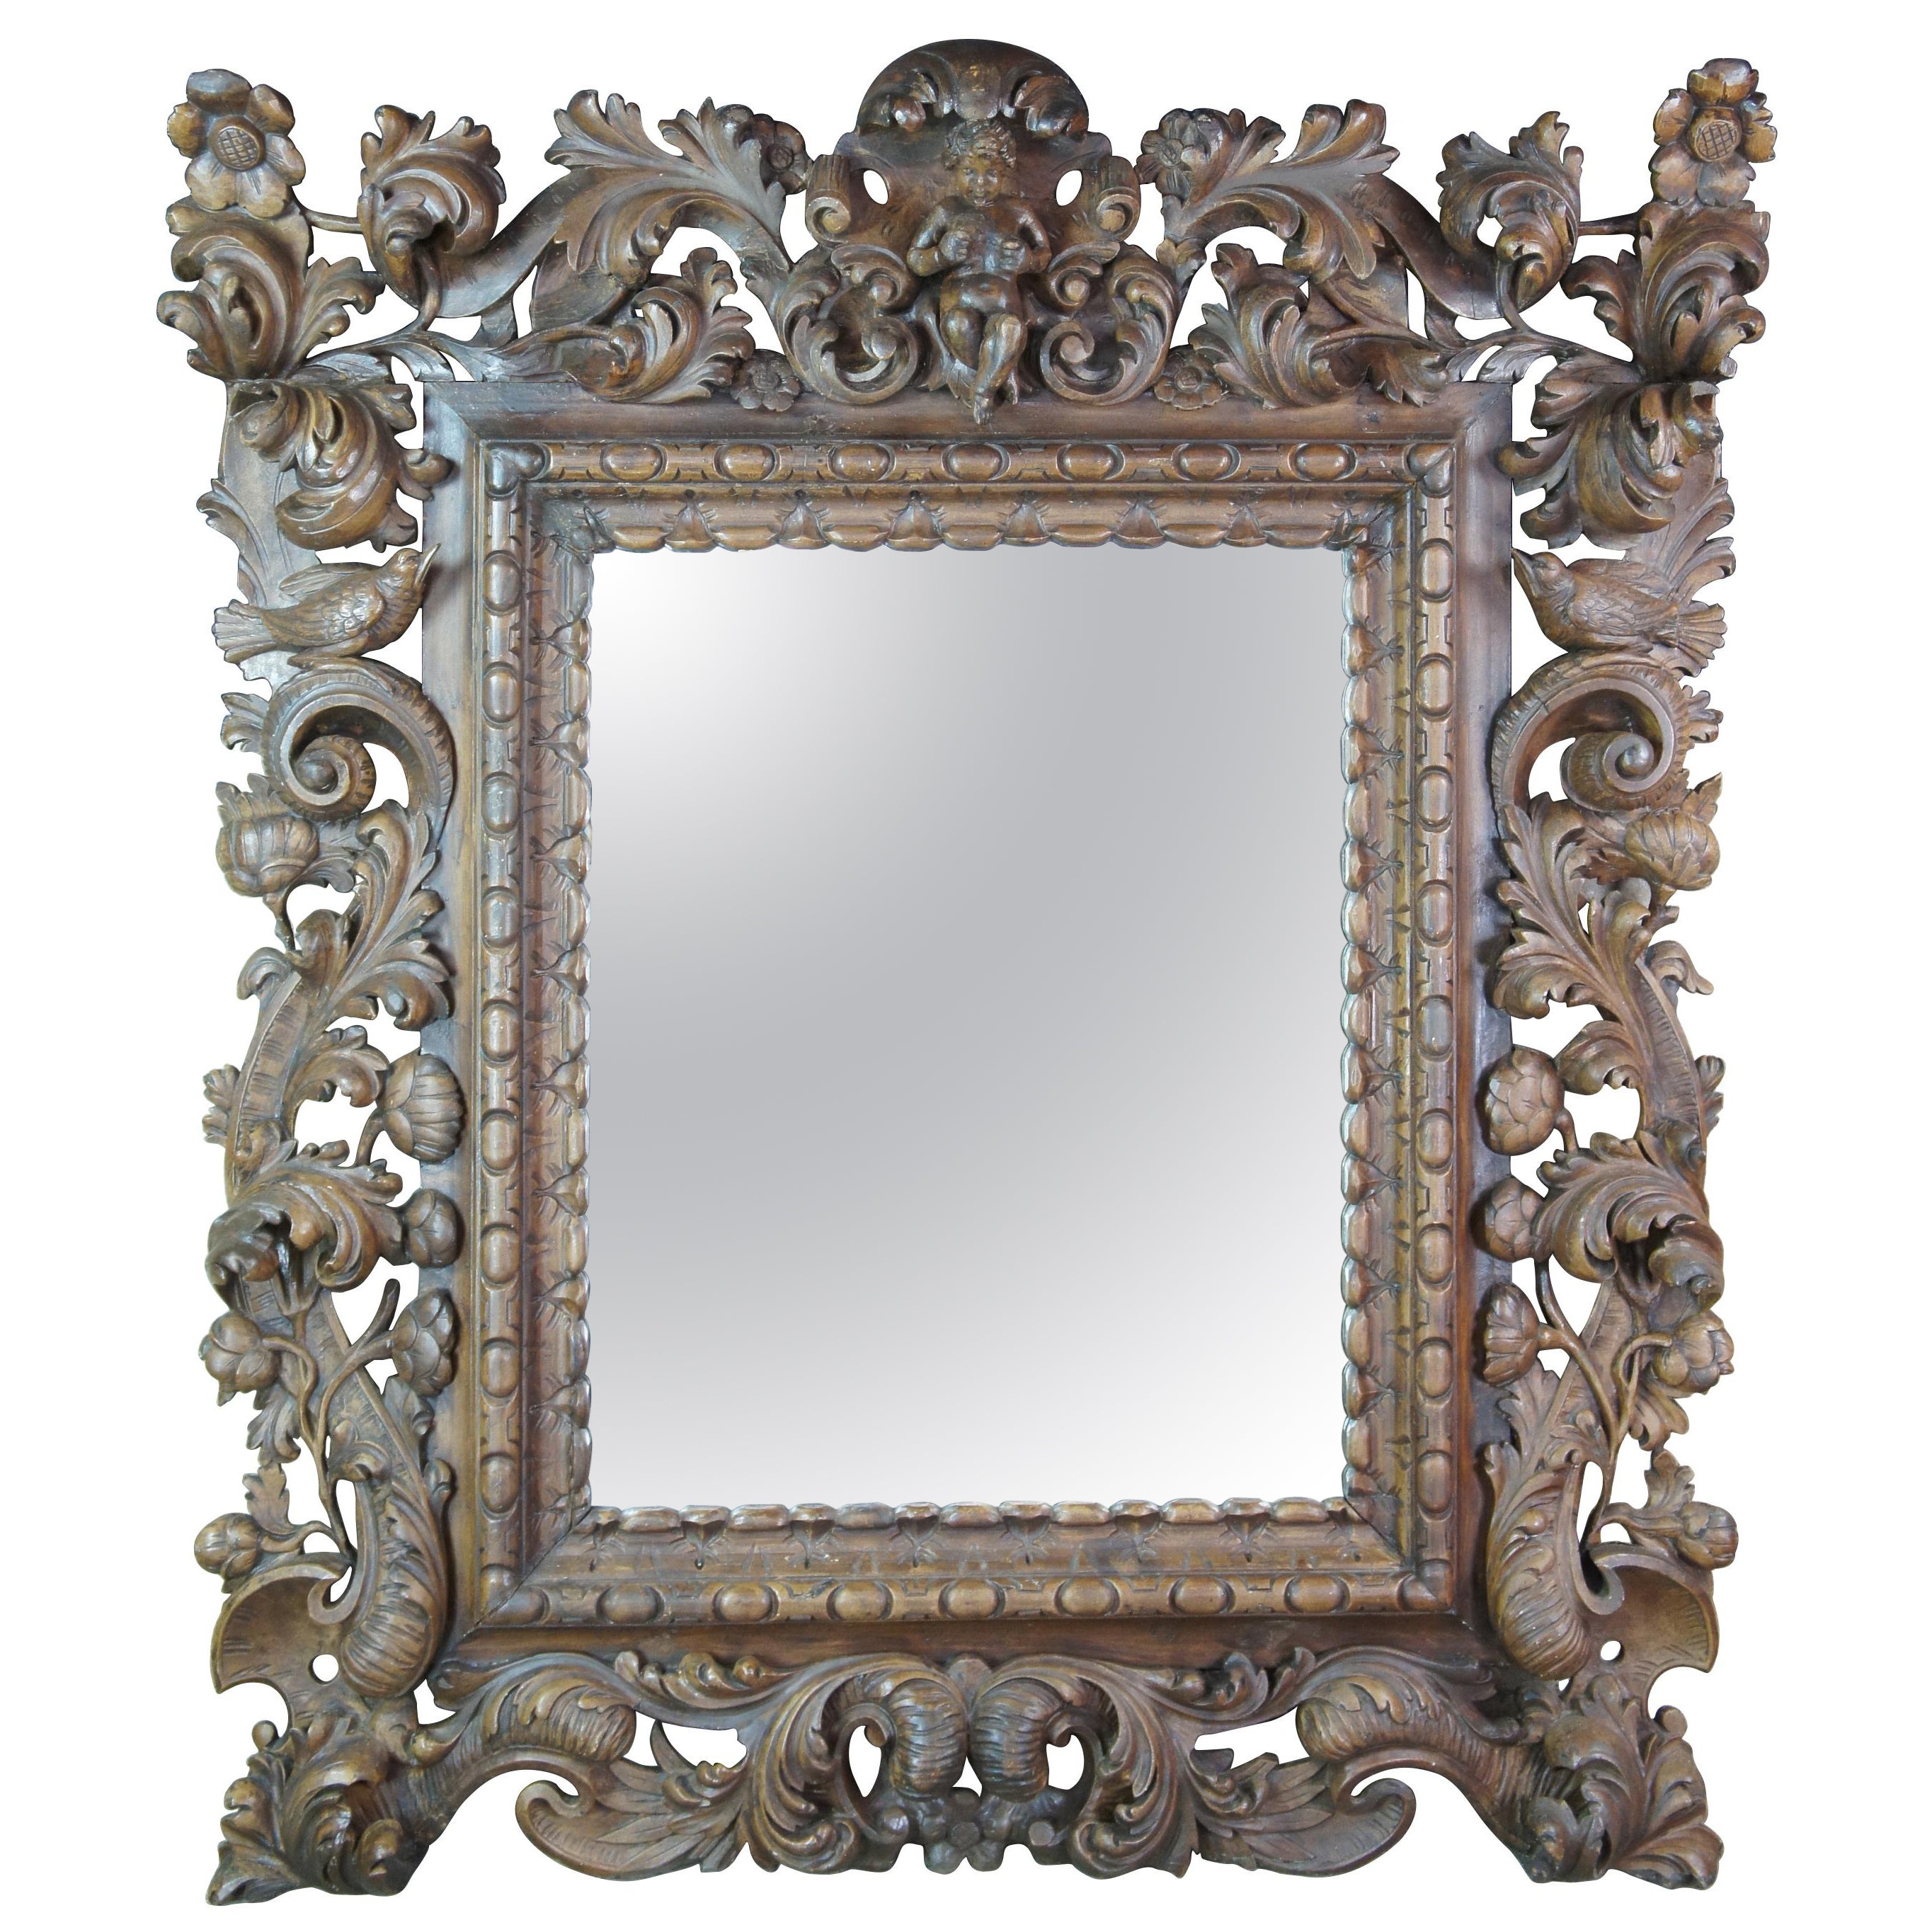 Monumental miroir chérubin baroque italien ancien sculpté en haut-relief en vente